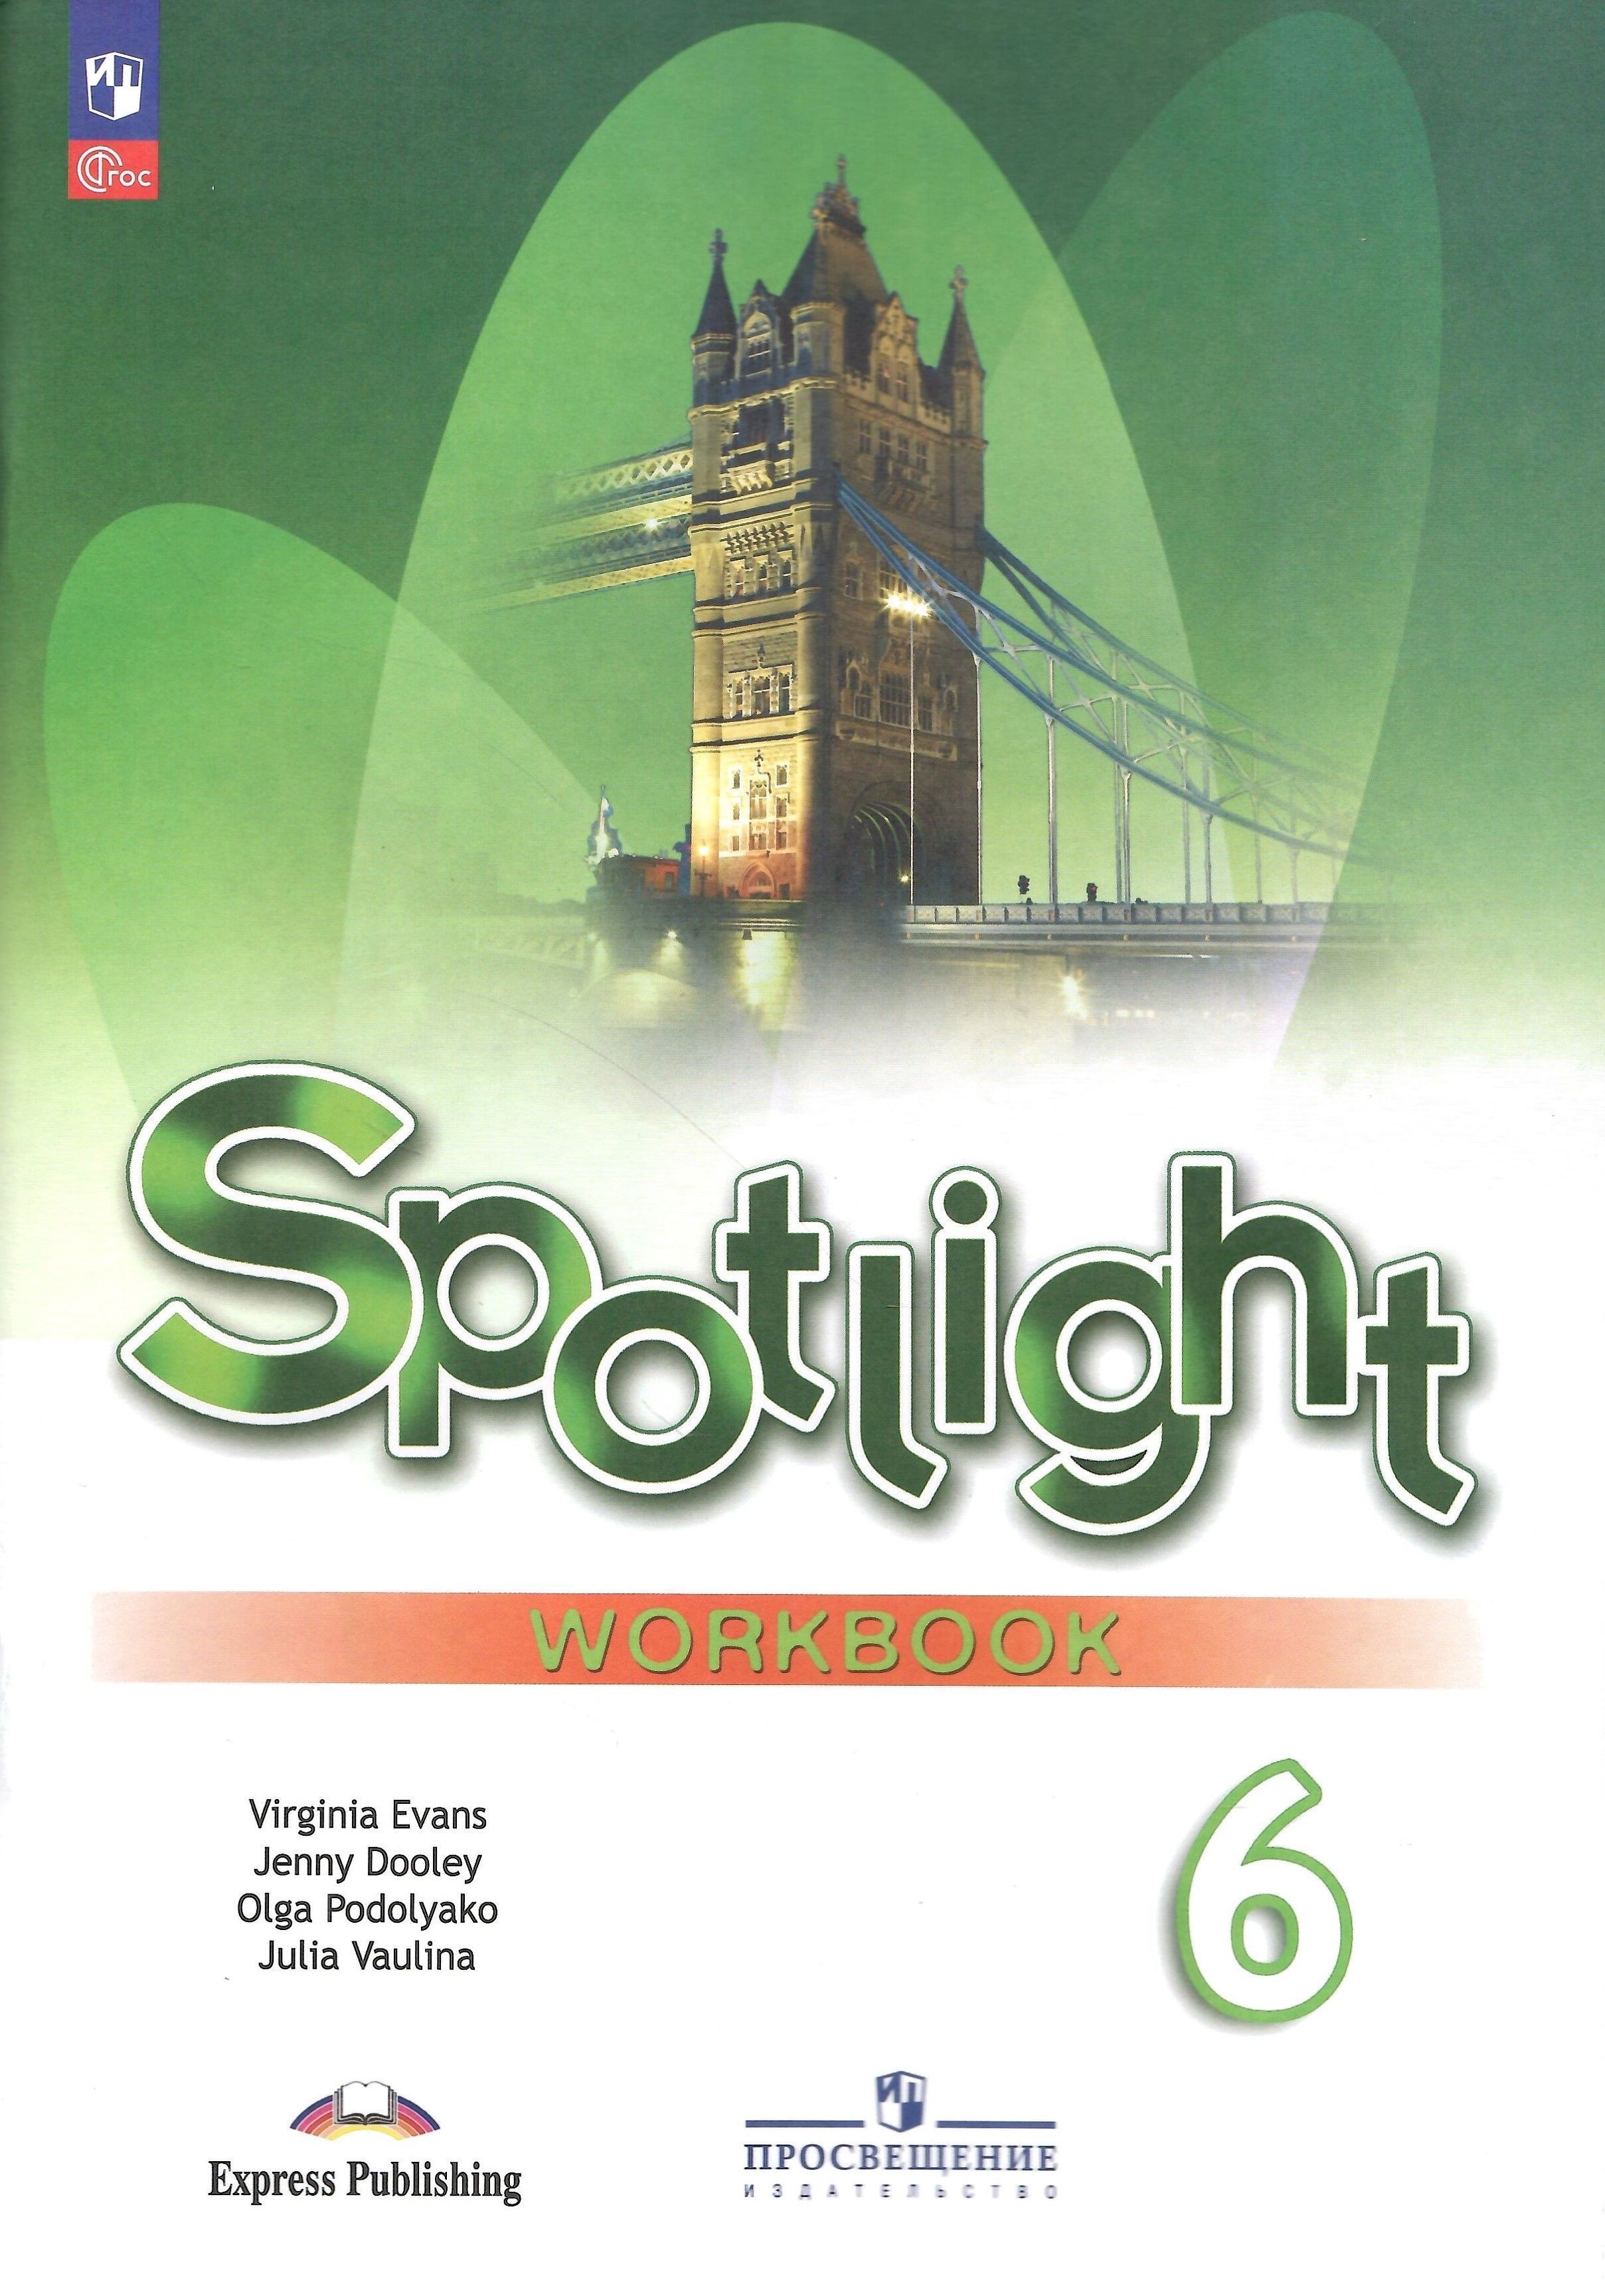 Уроки spotlight 11 класс. Английский язык 11 класс Spotlight ваулина. Spotlight 8 рабочая тетрадь обложка. Workbook 6 класс Spotlight. Тетрадь по английскому языку 11 класс Spotlight.